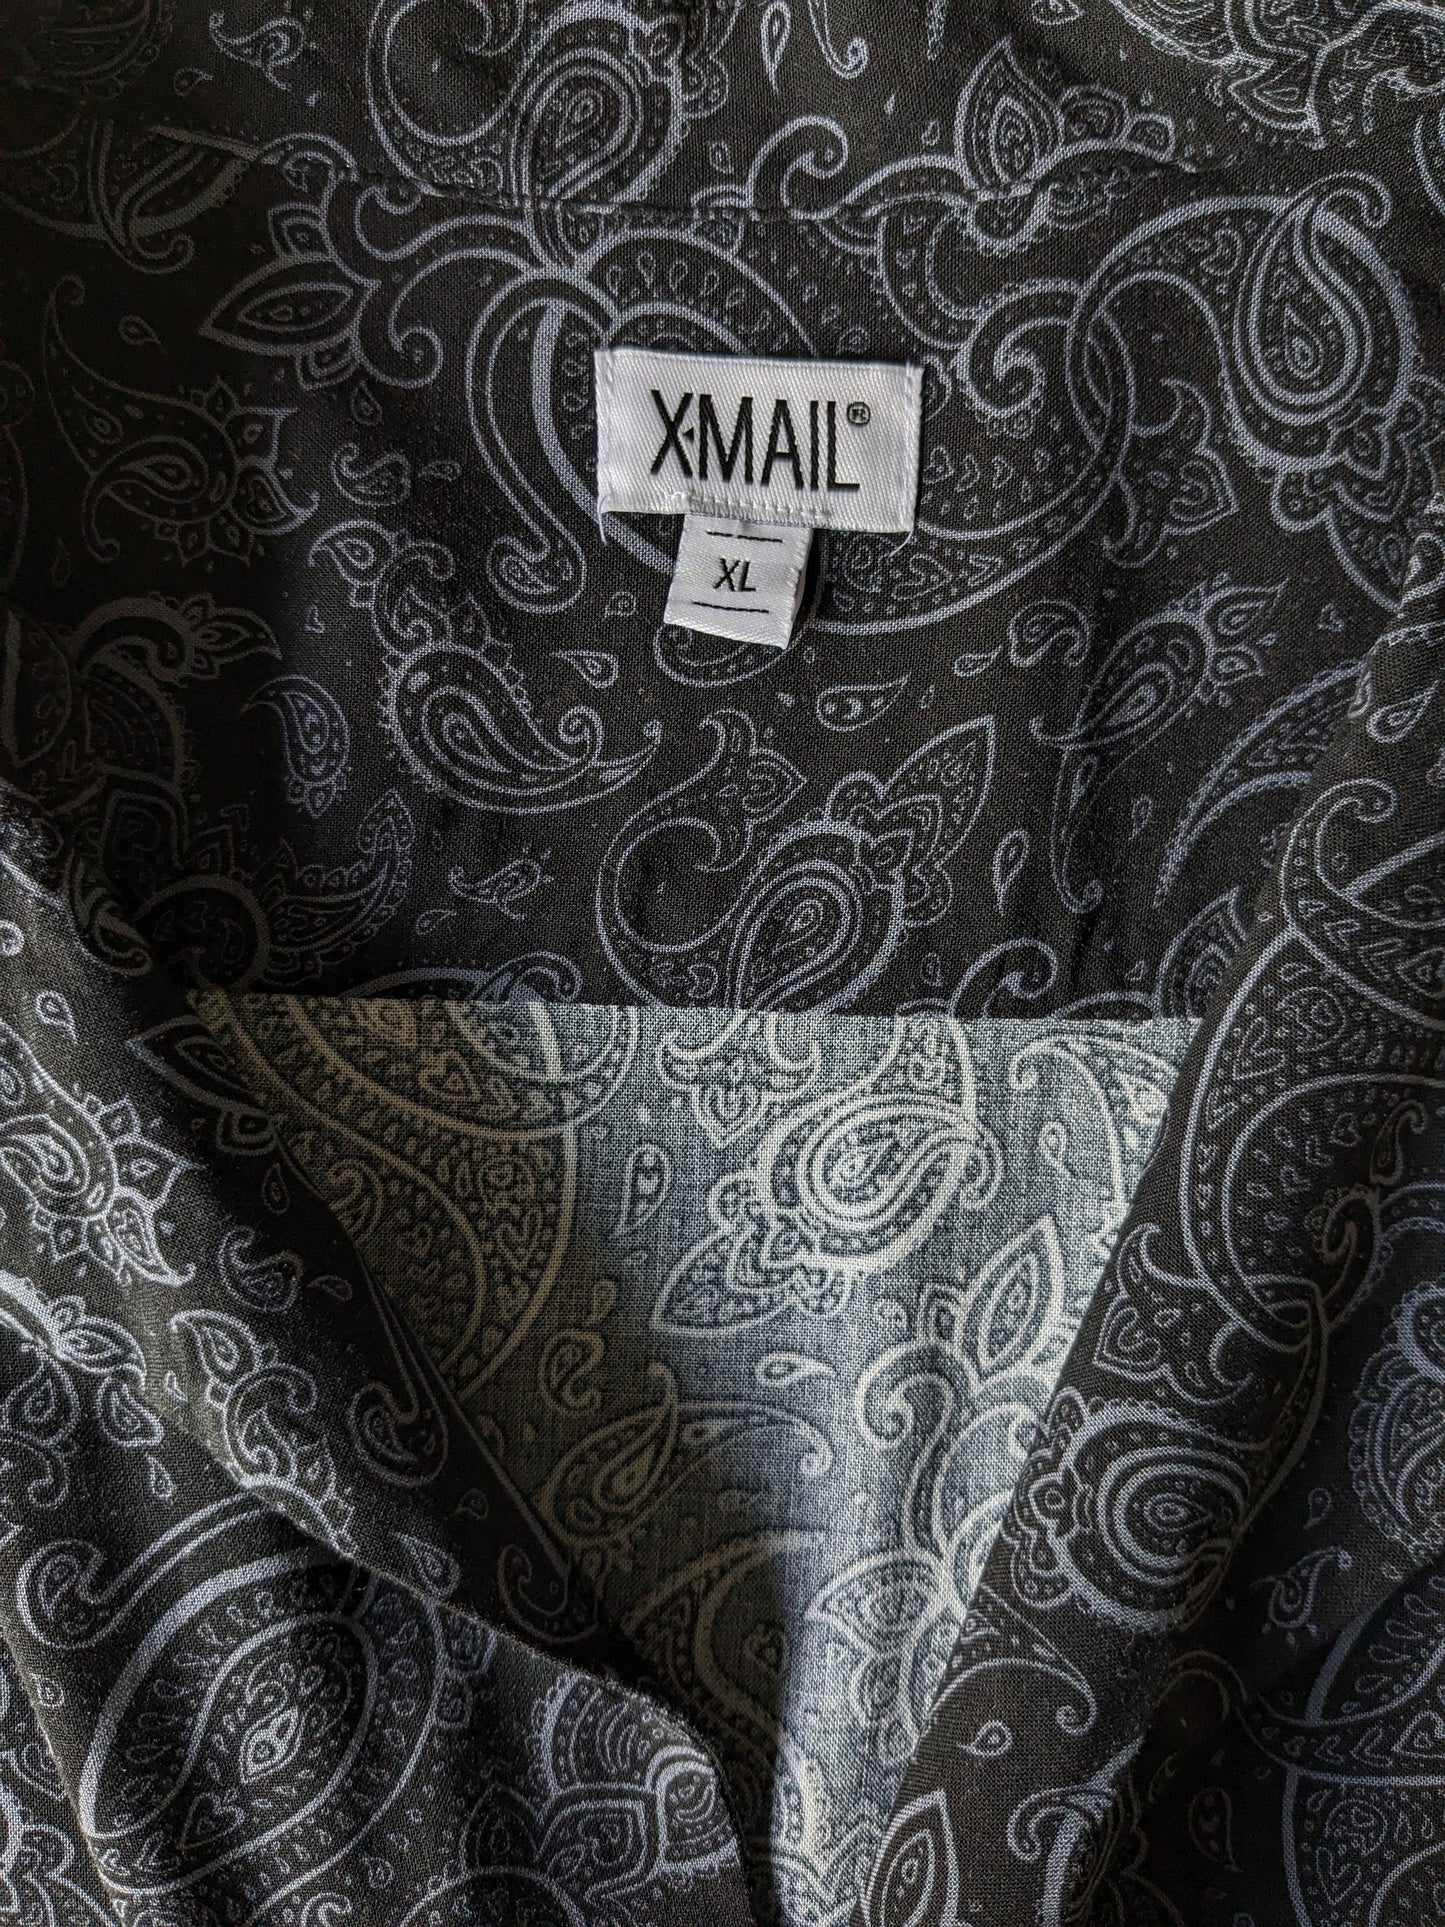 X-Mail overhemd korte mouw. Zwart Grijze paisley print. Maat XL.